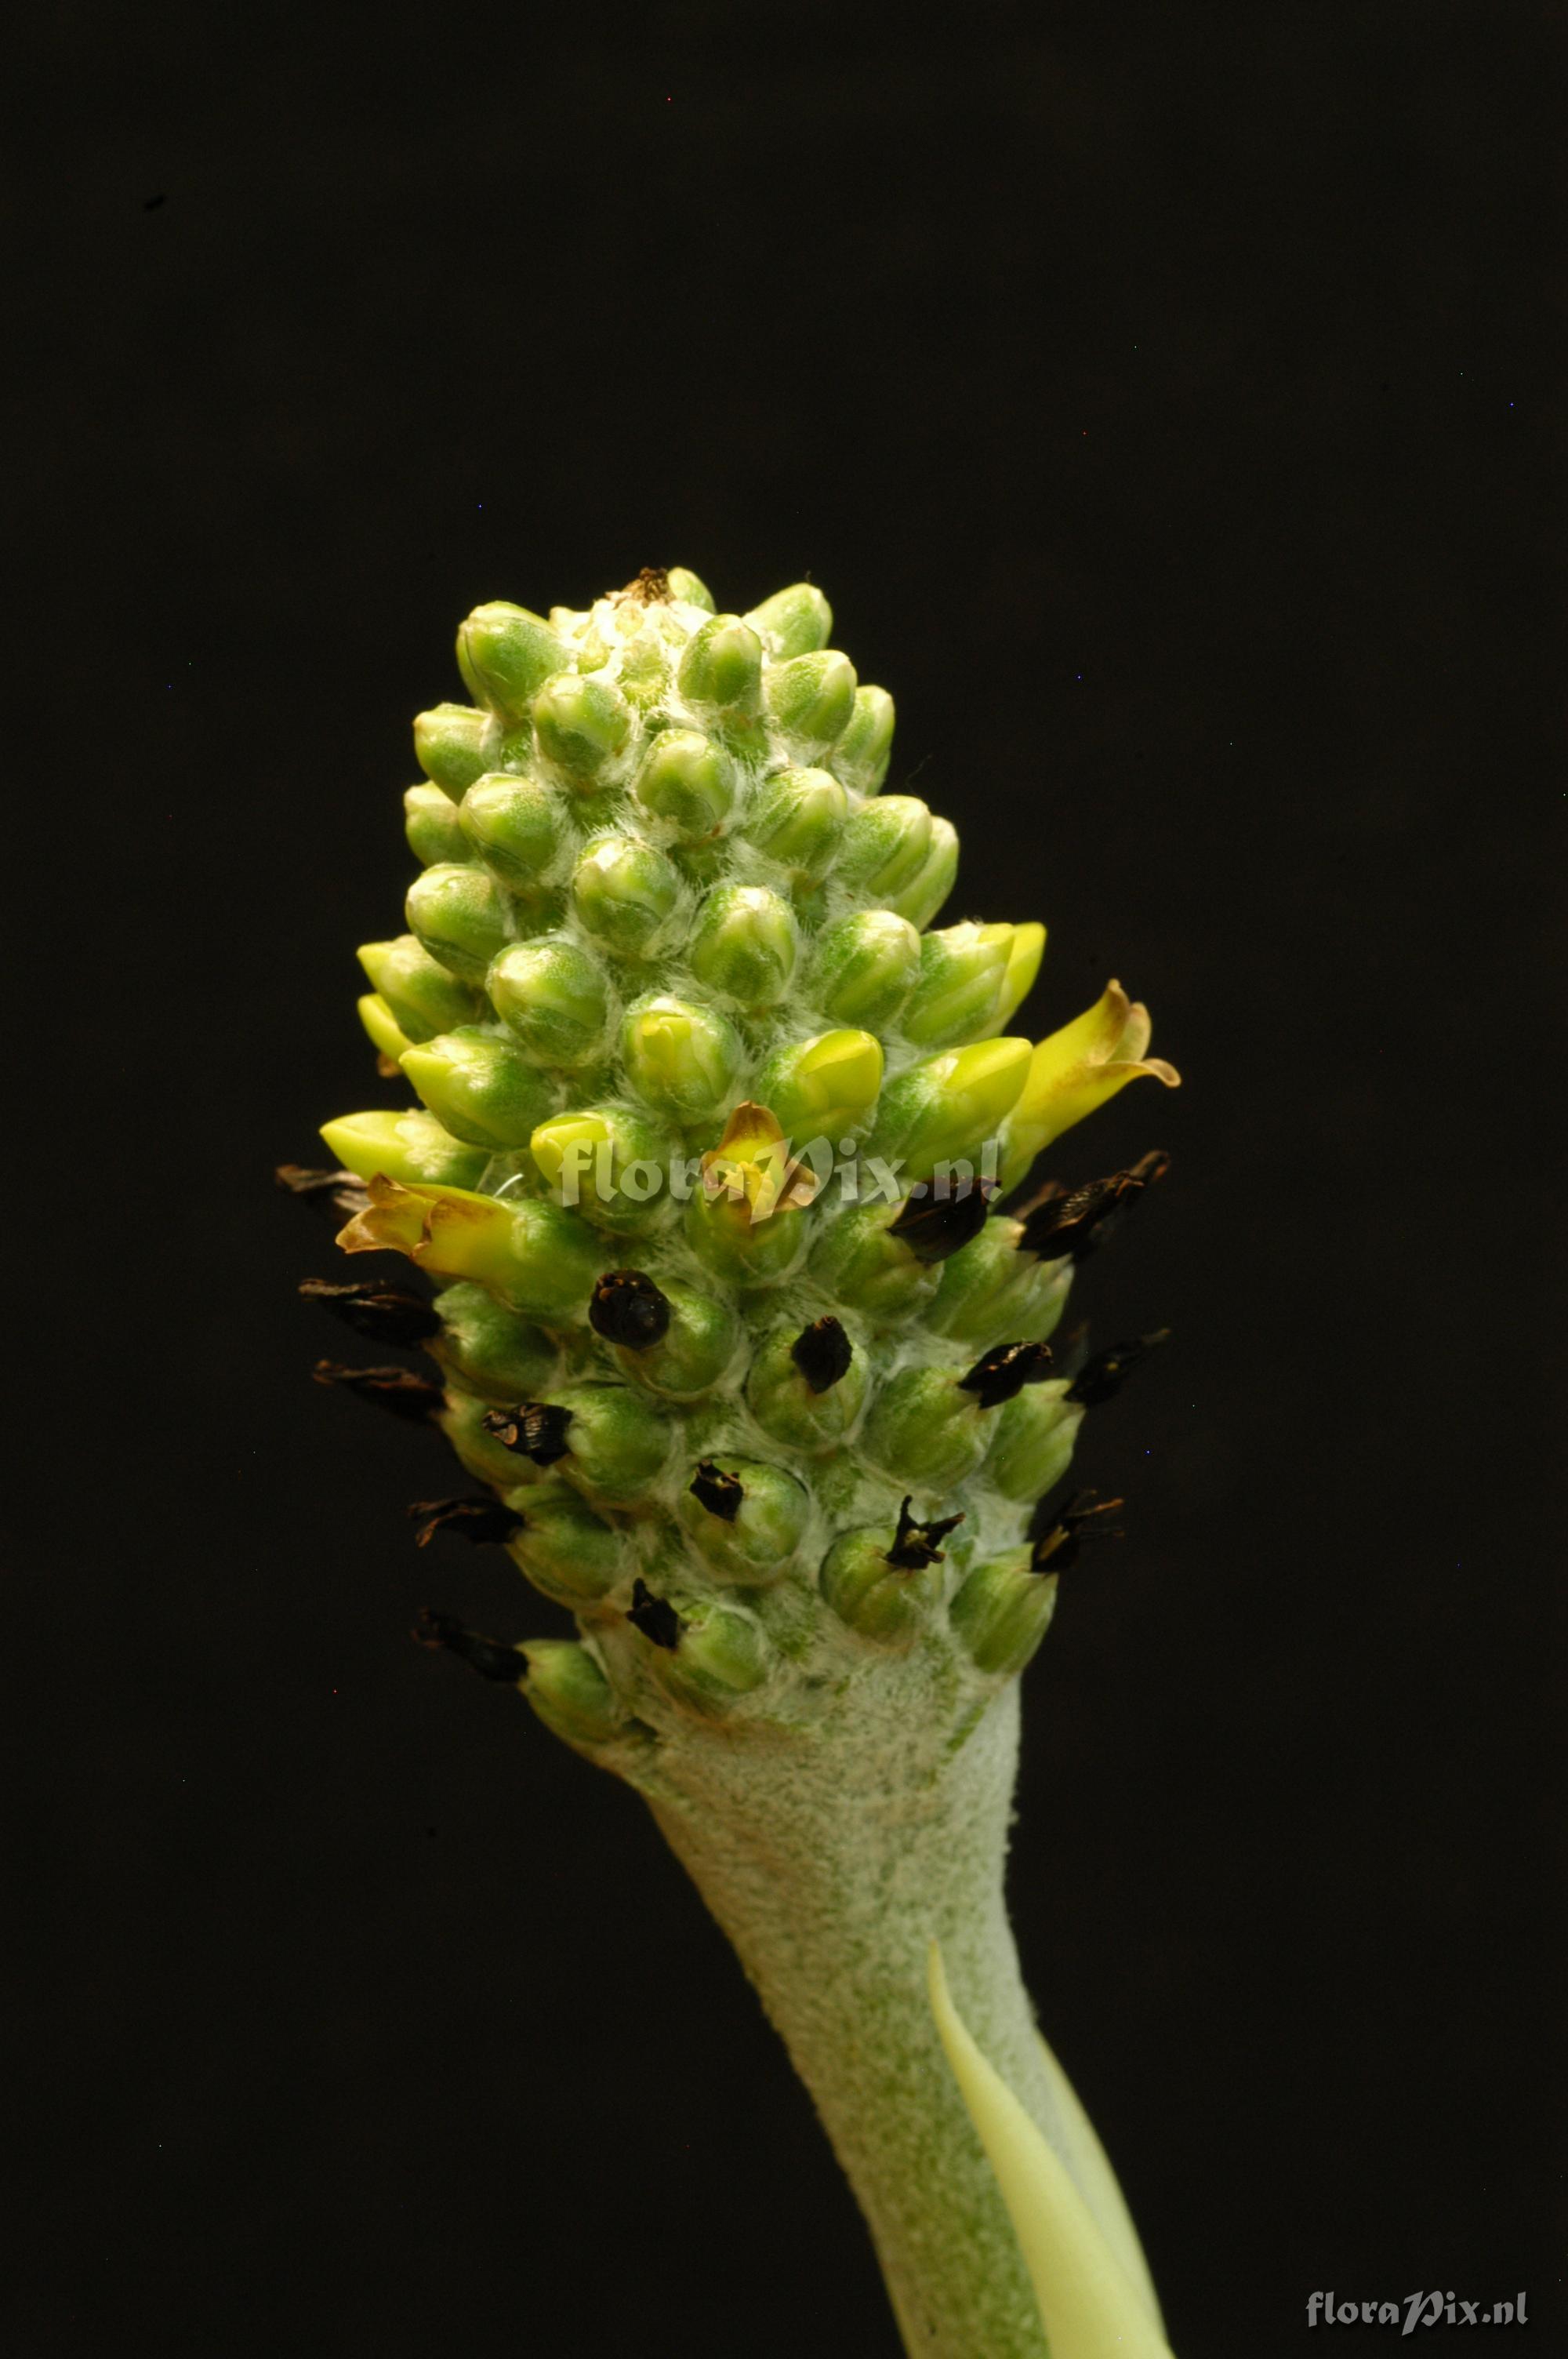 Aechmea bromeliifolia